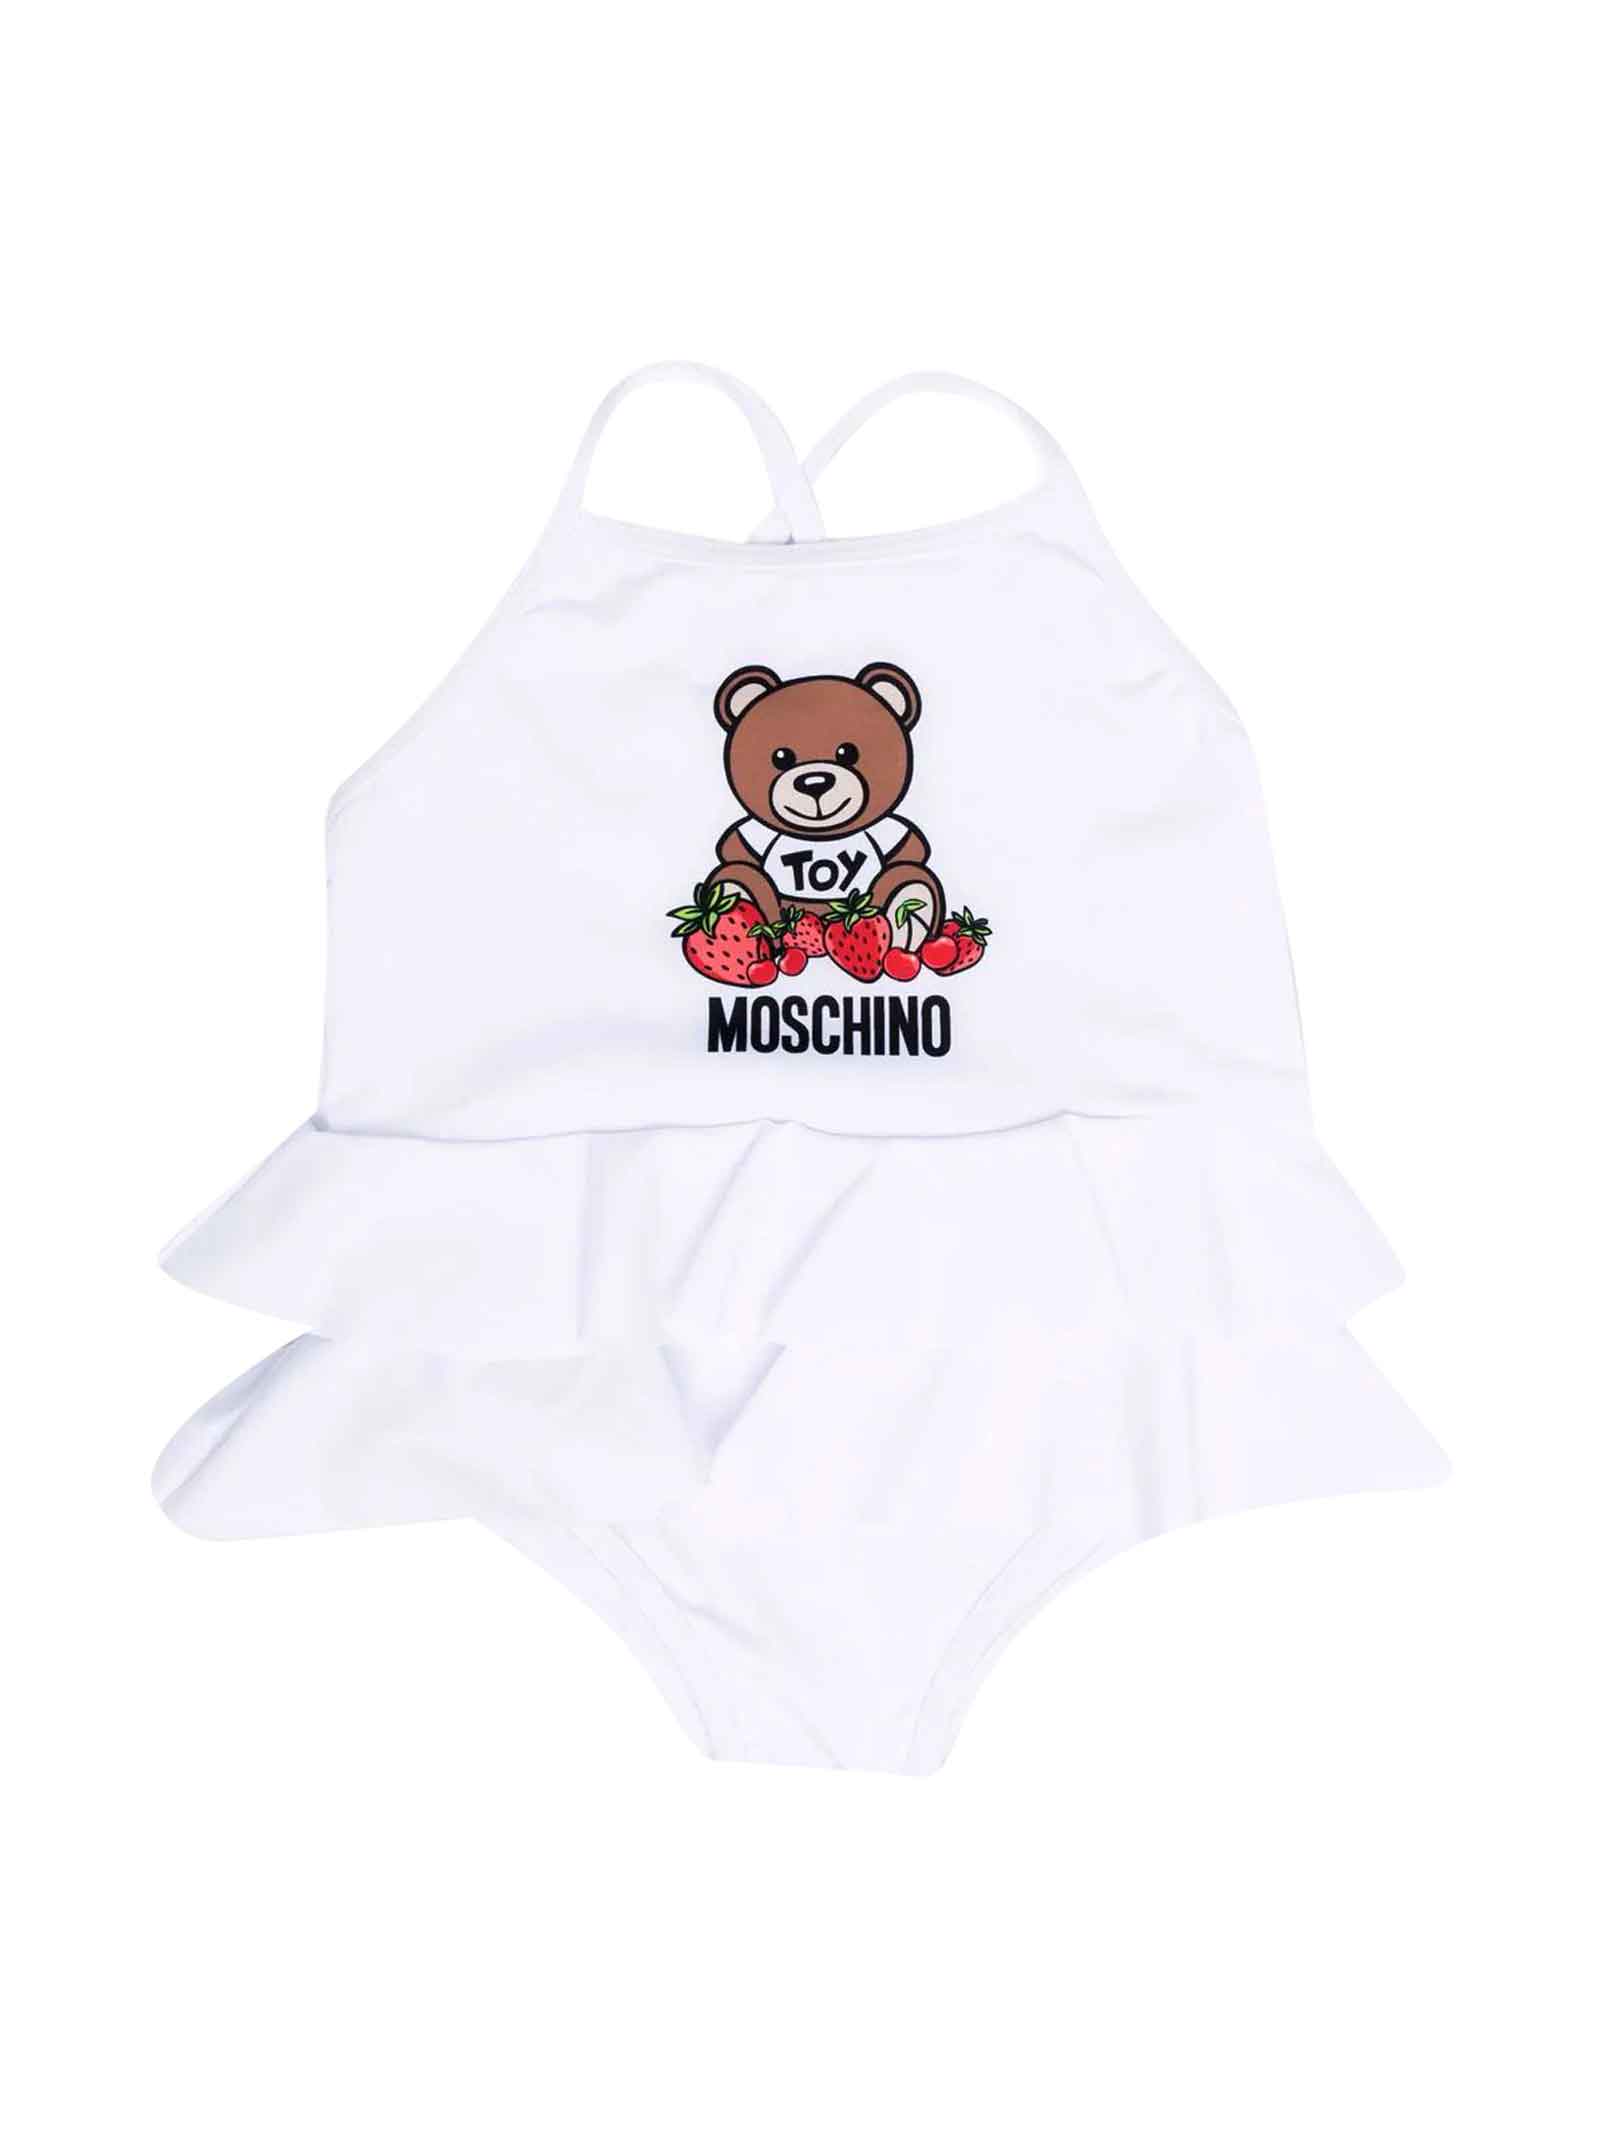 Moschino White One-piece Swimsuit Baby